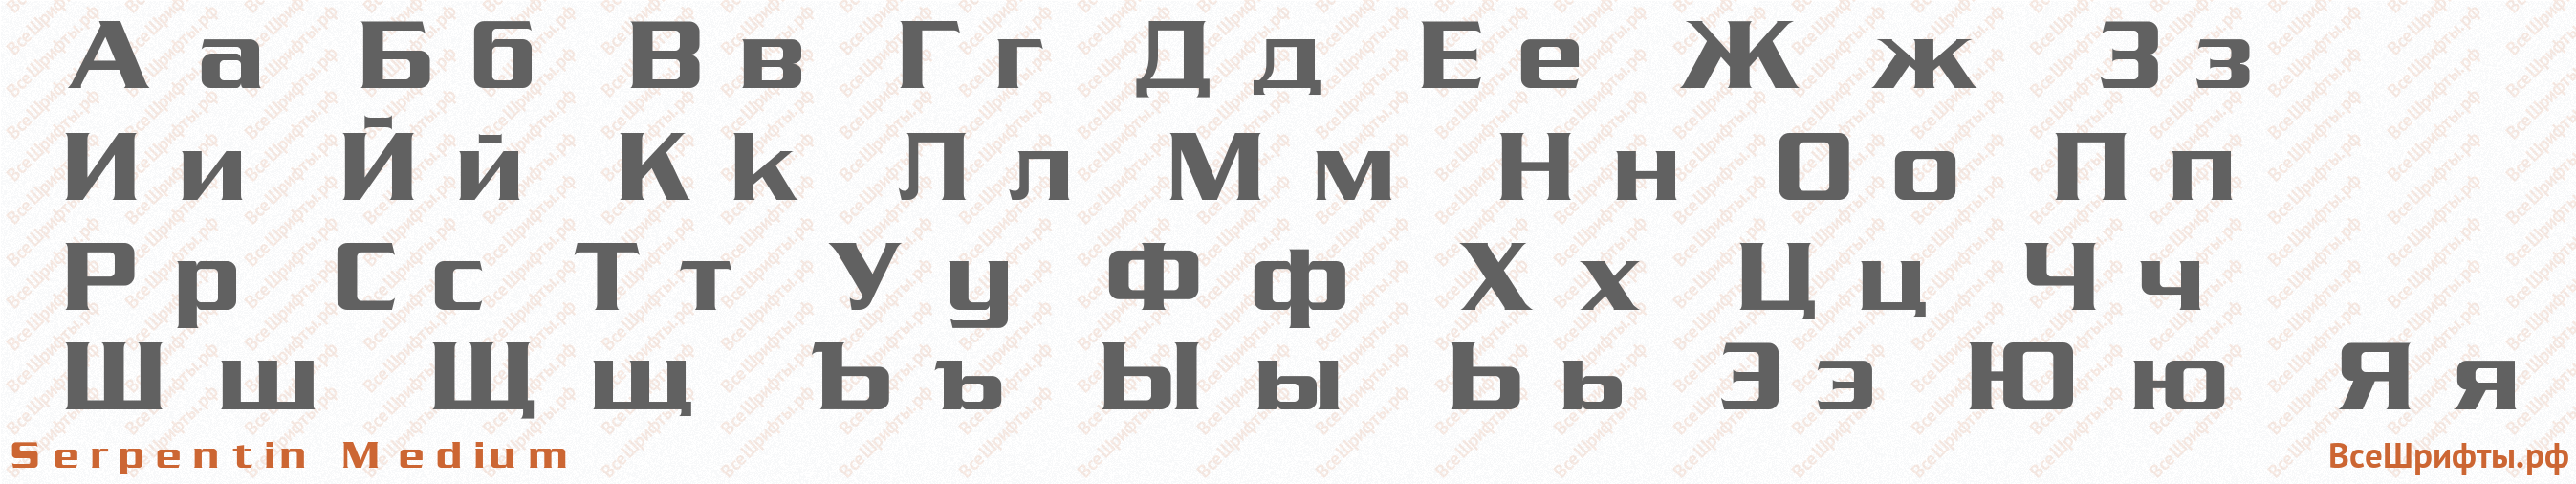 Шрифт Serpentin Medium с русскими буквами